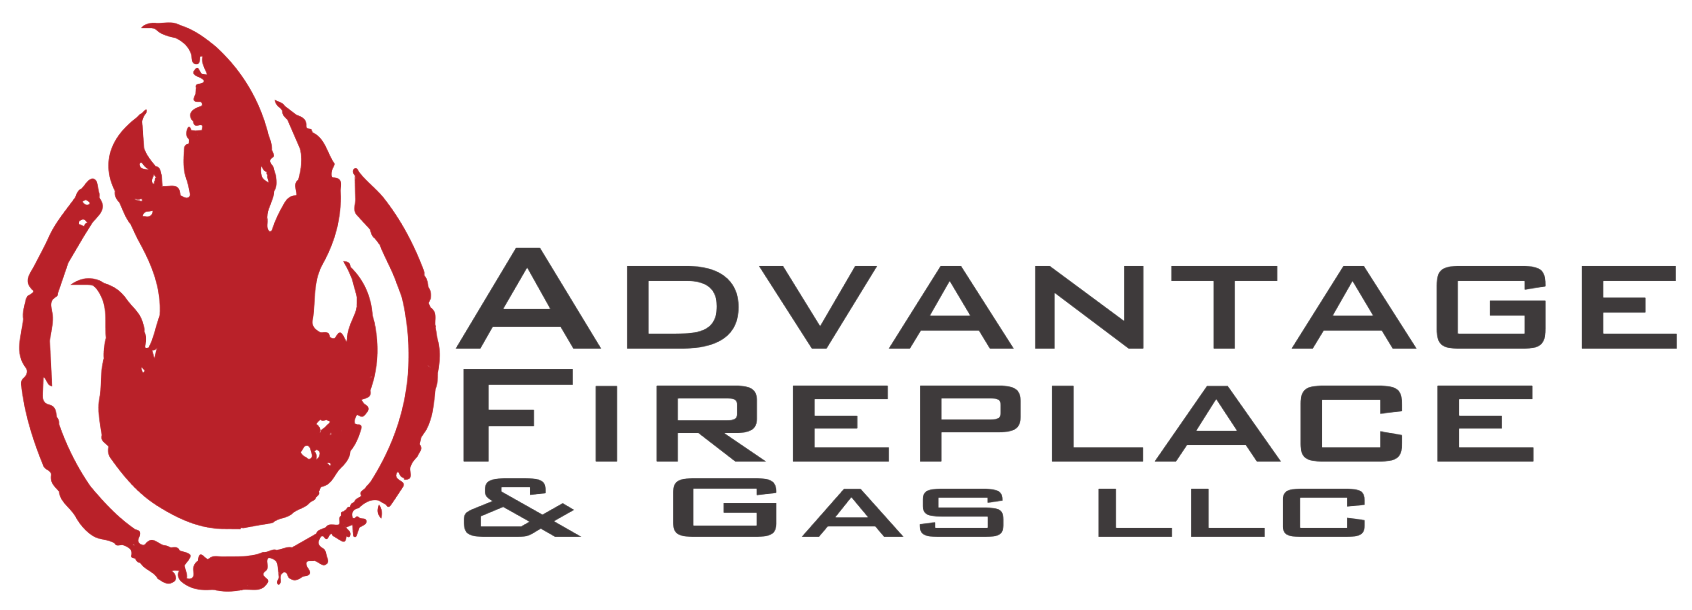 Advantage Fireplace & Gas LLC - Logo